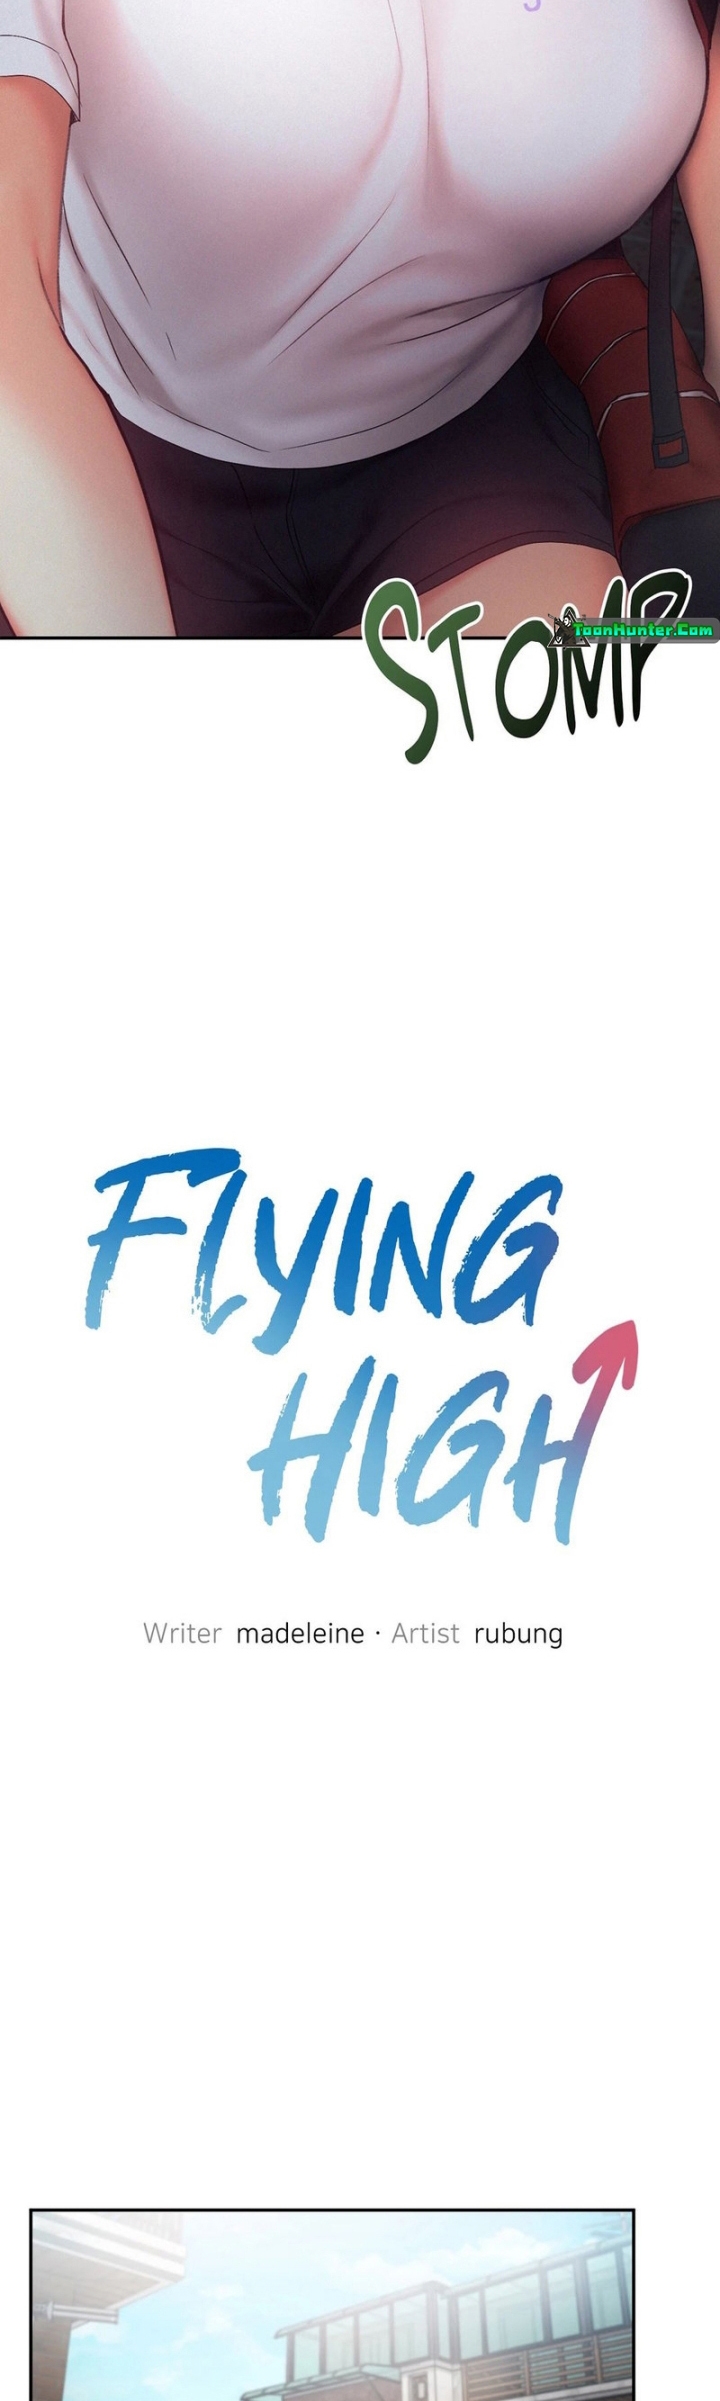 Flying High04